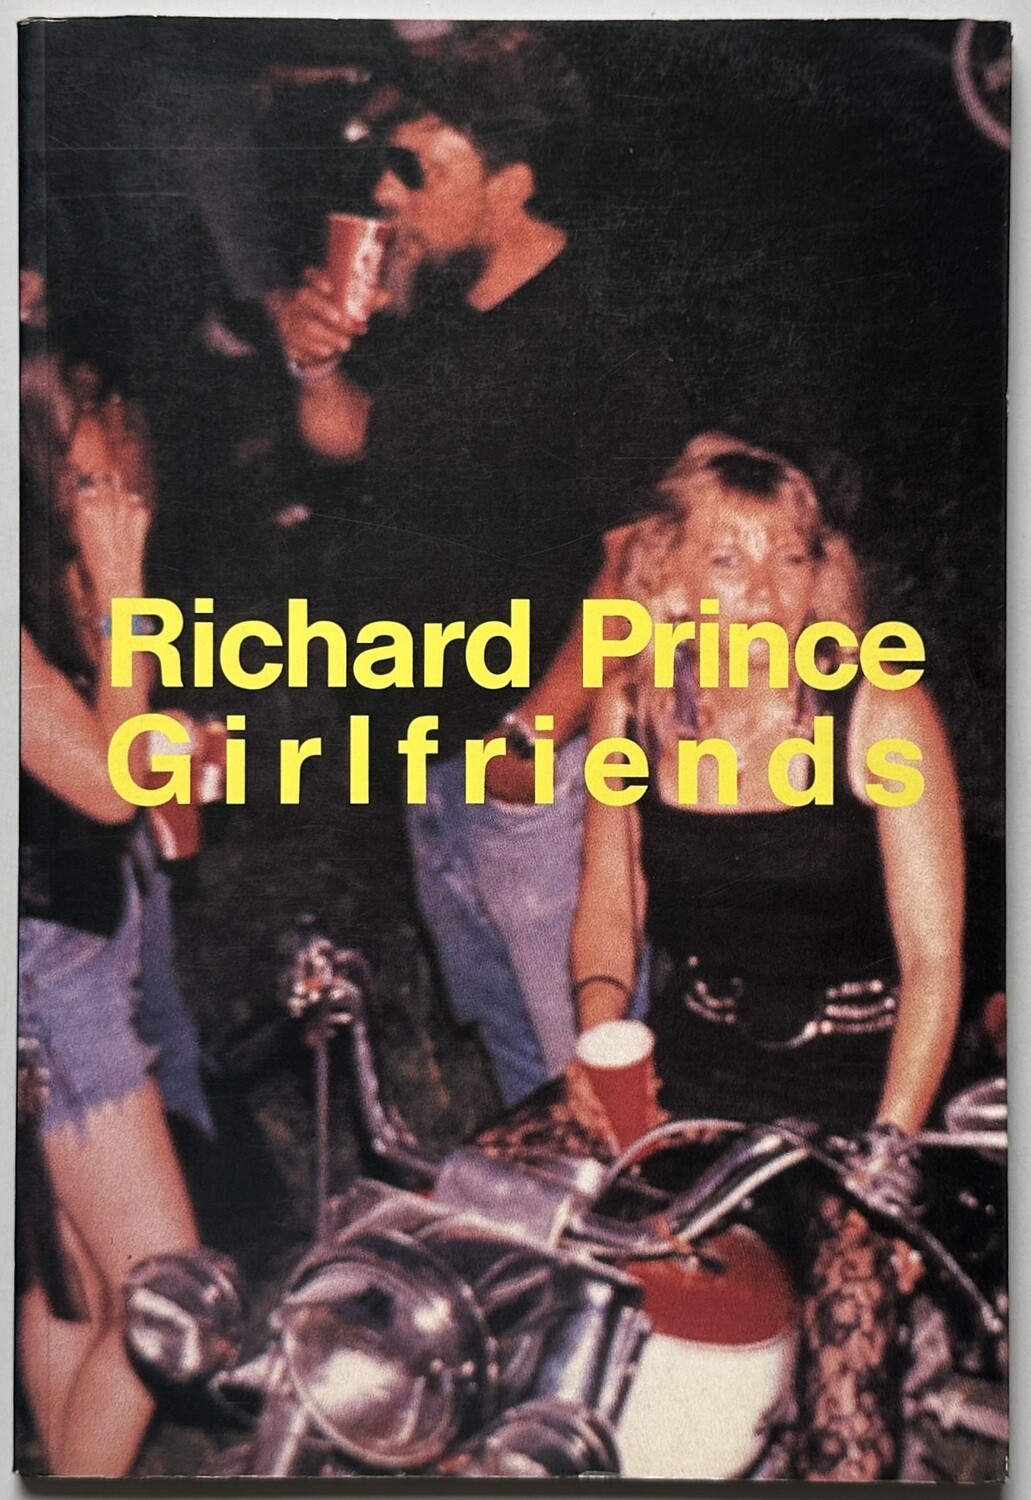 Richard Prince Girlfriends